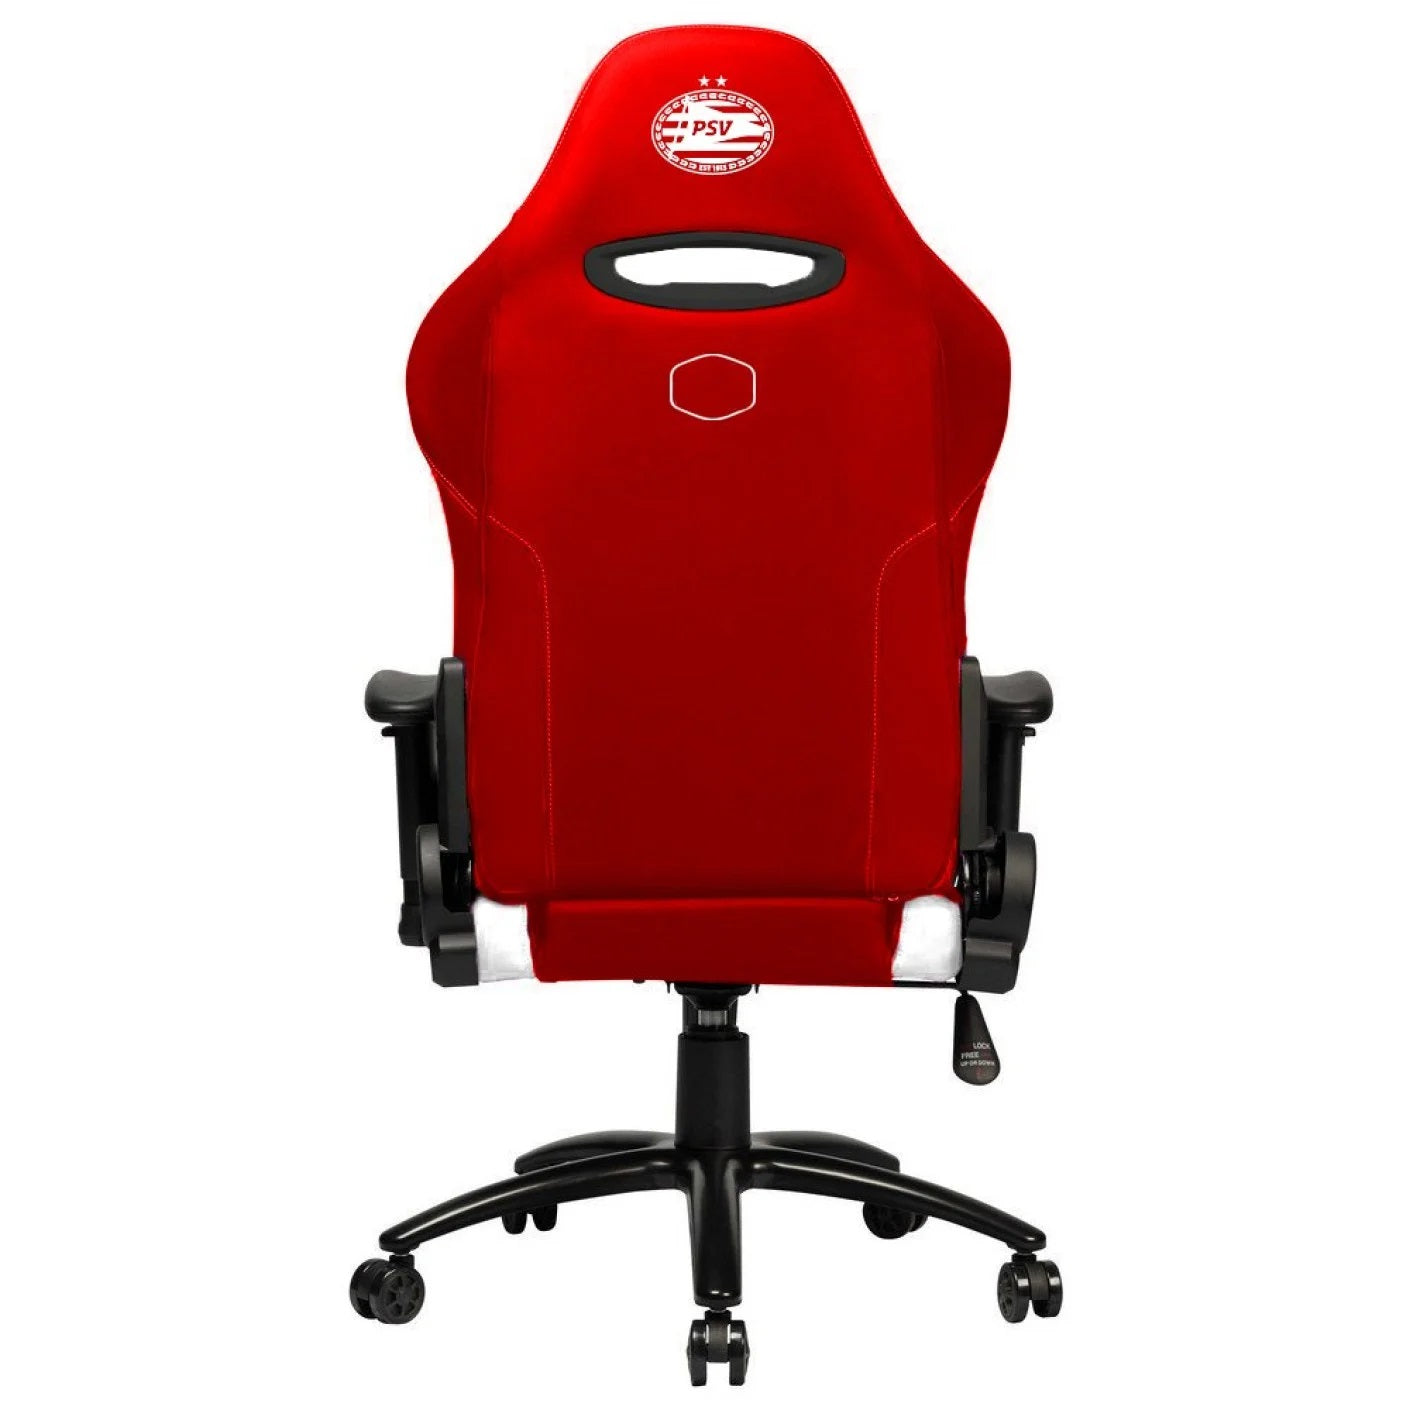 Cooler Master Caliber R2 Gaming Chair - PSV